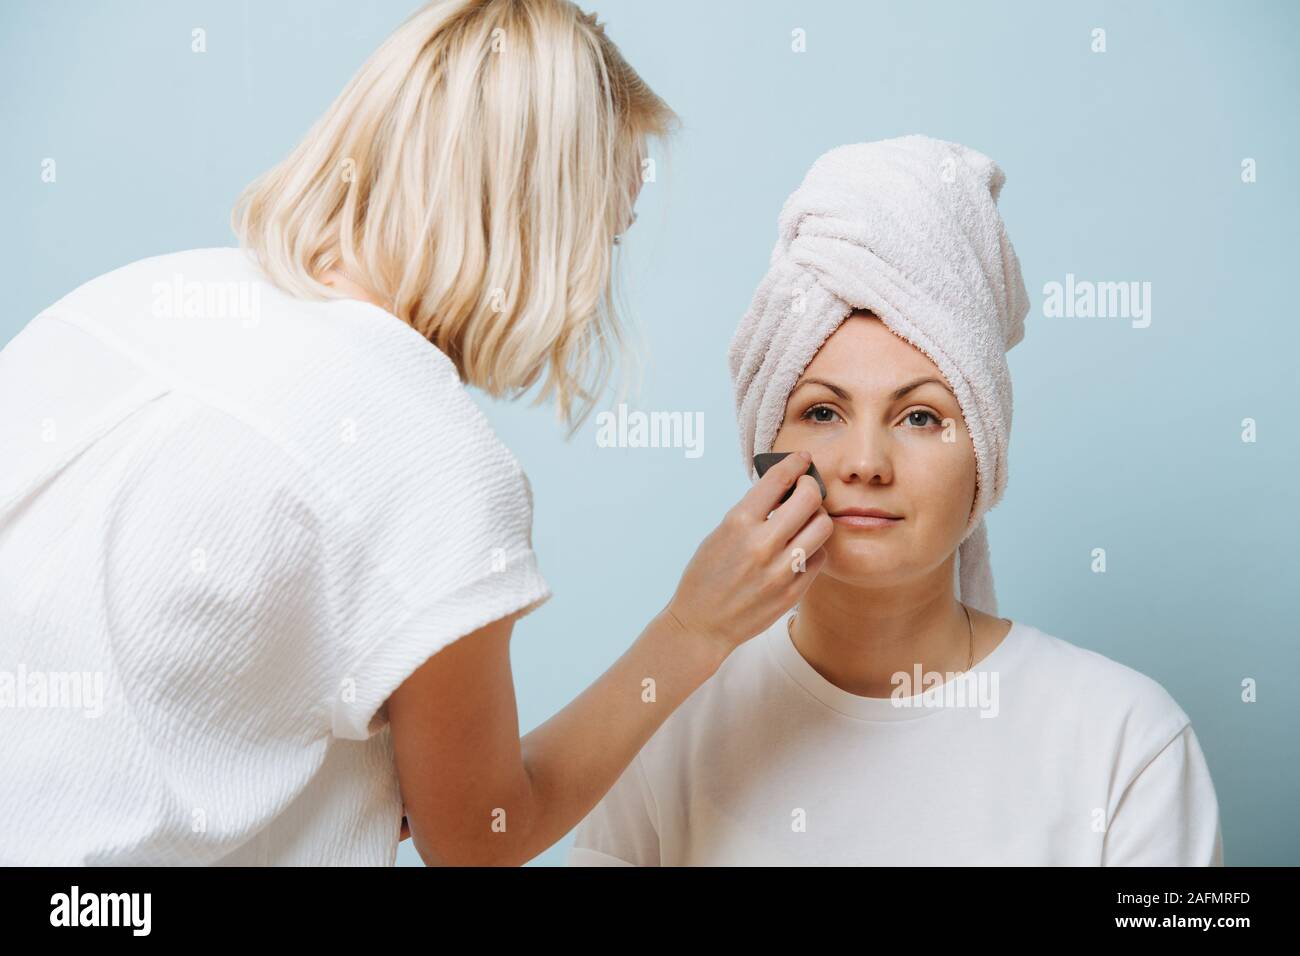 Female hairdresser applying setting powder on client's cheeks over blue. Stock Photo